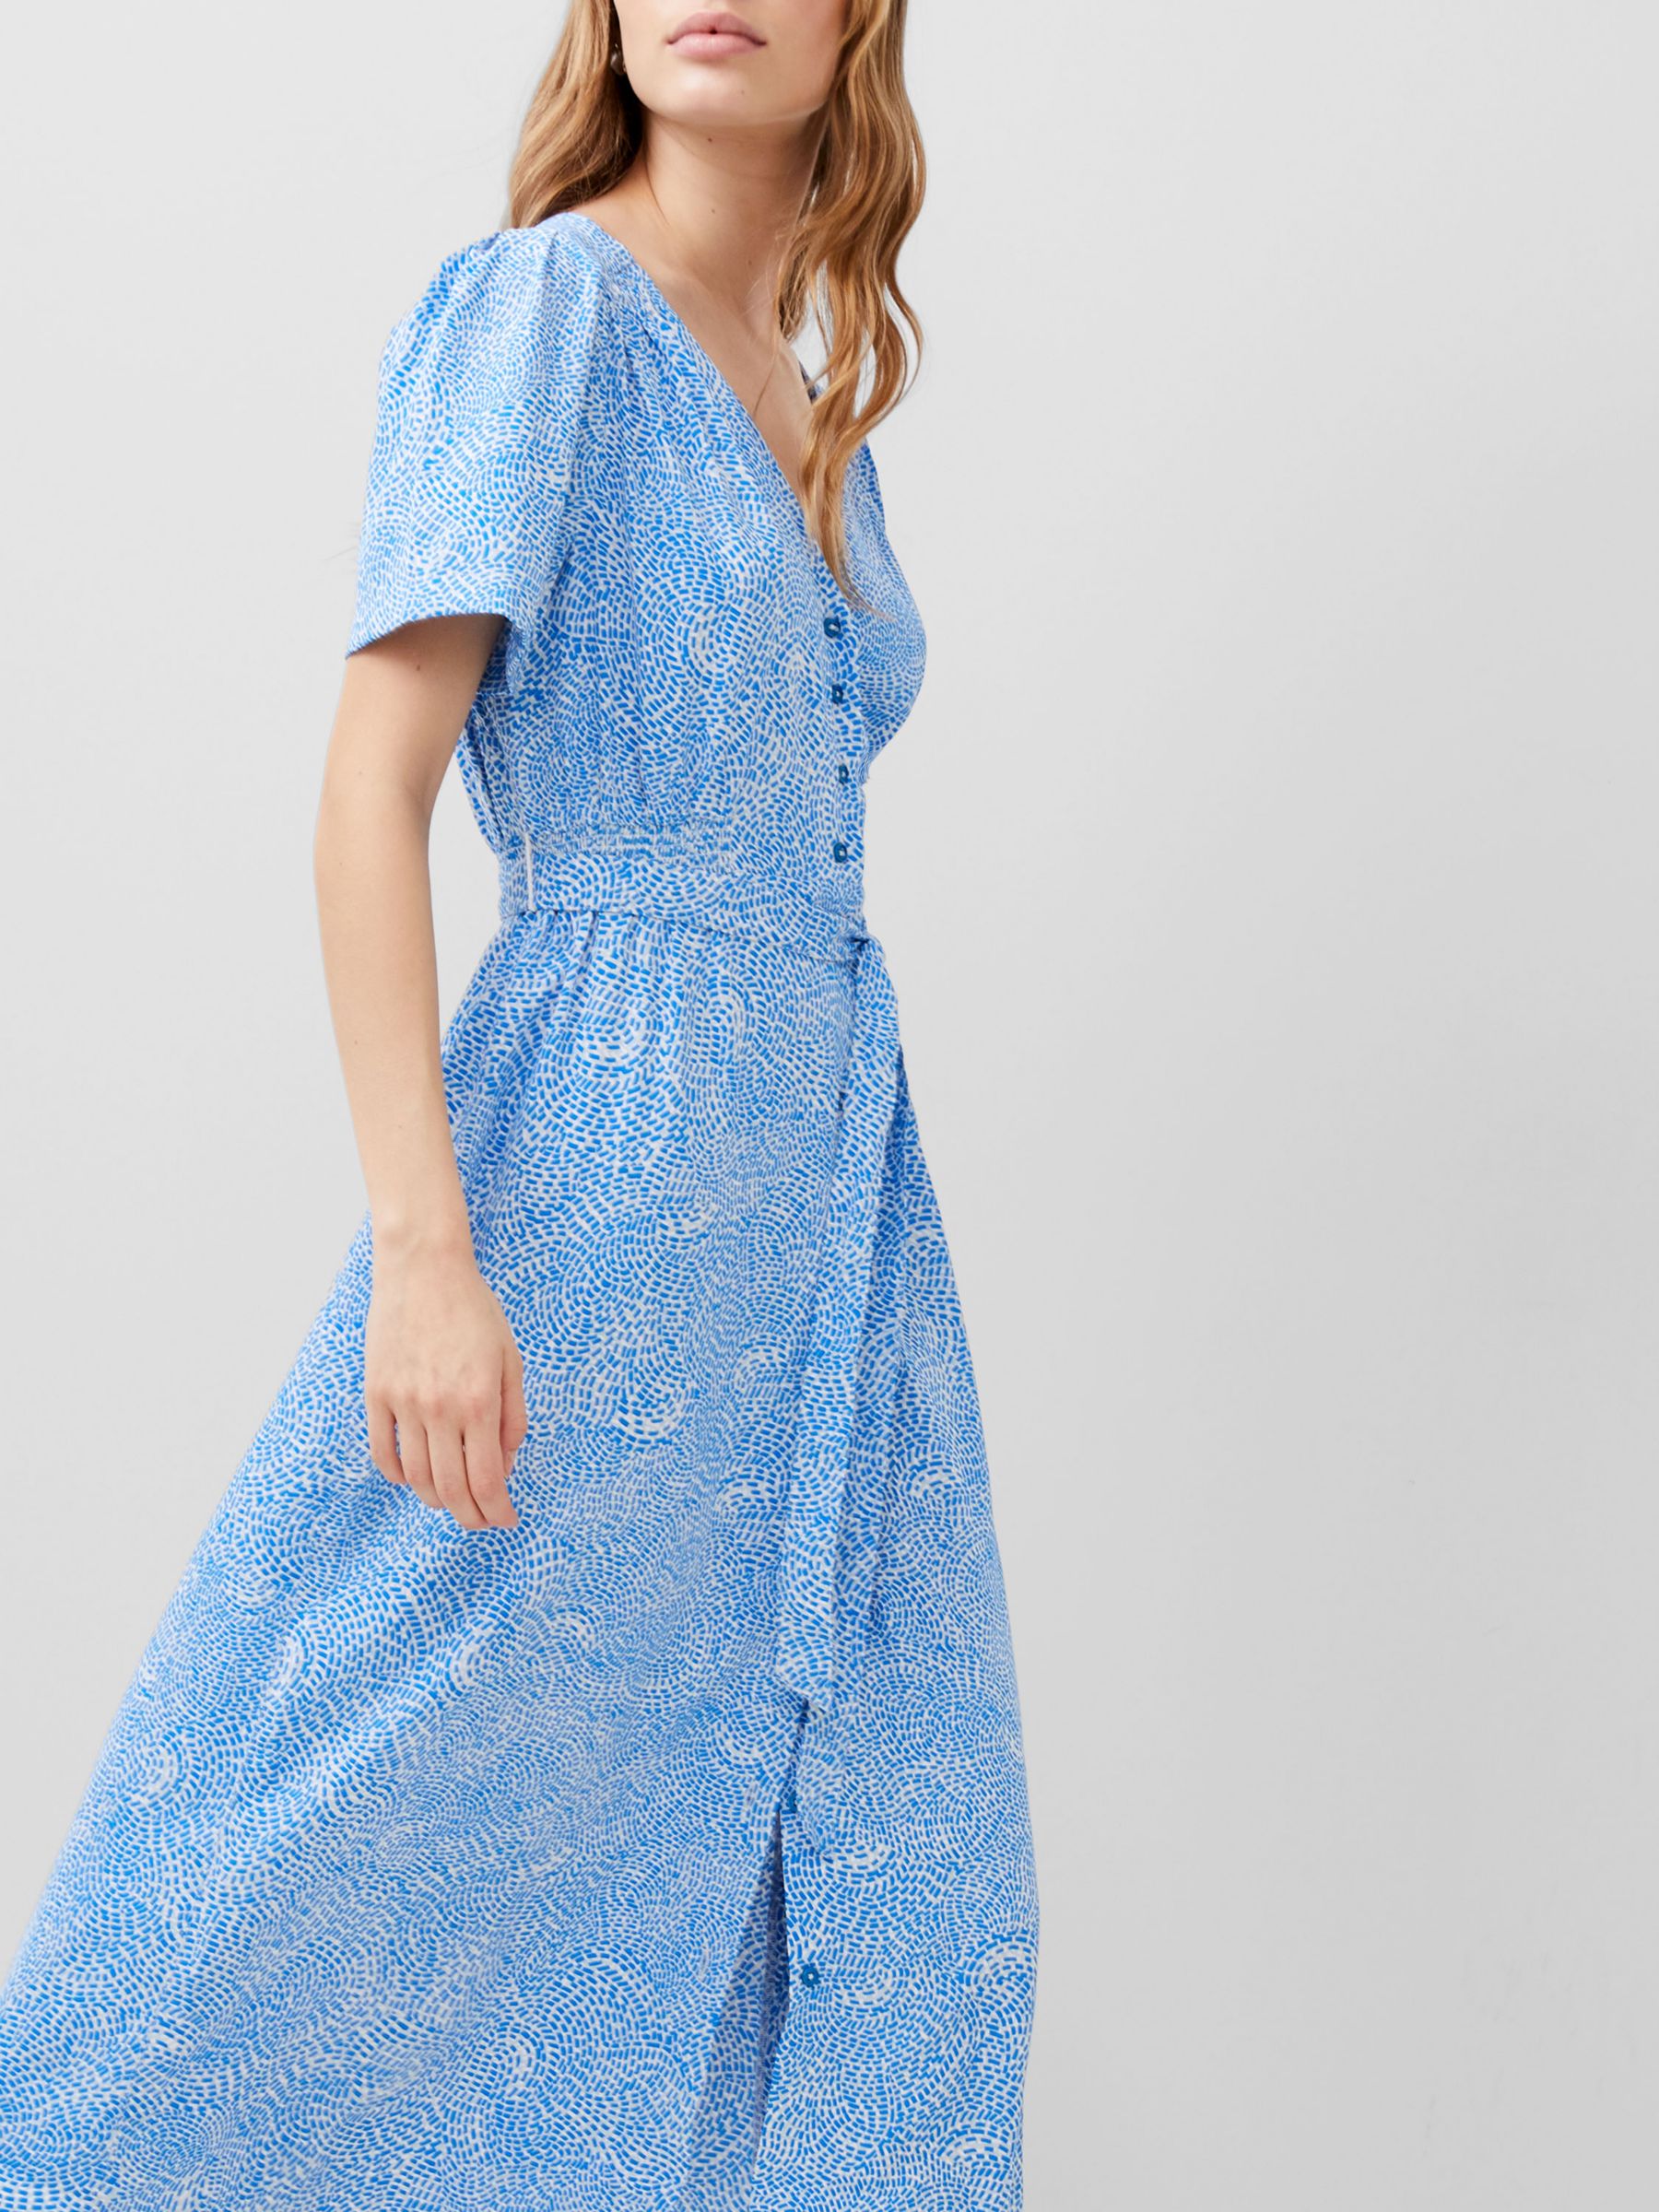 French Connection Bernice Elitan Abstract Print Midi Dress, Blue Mist, 8